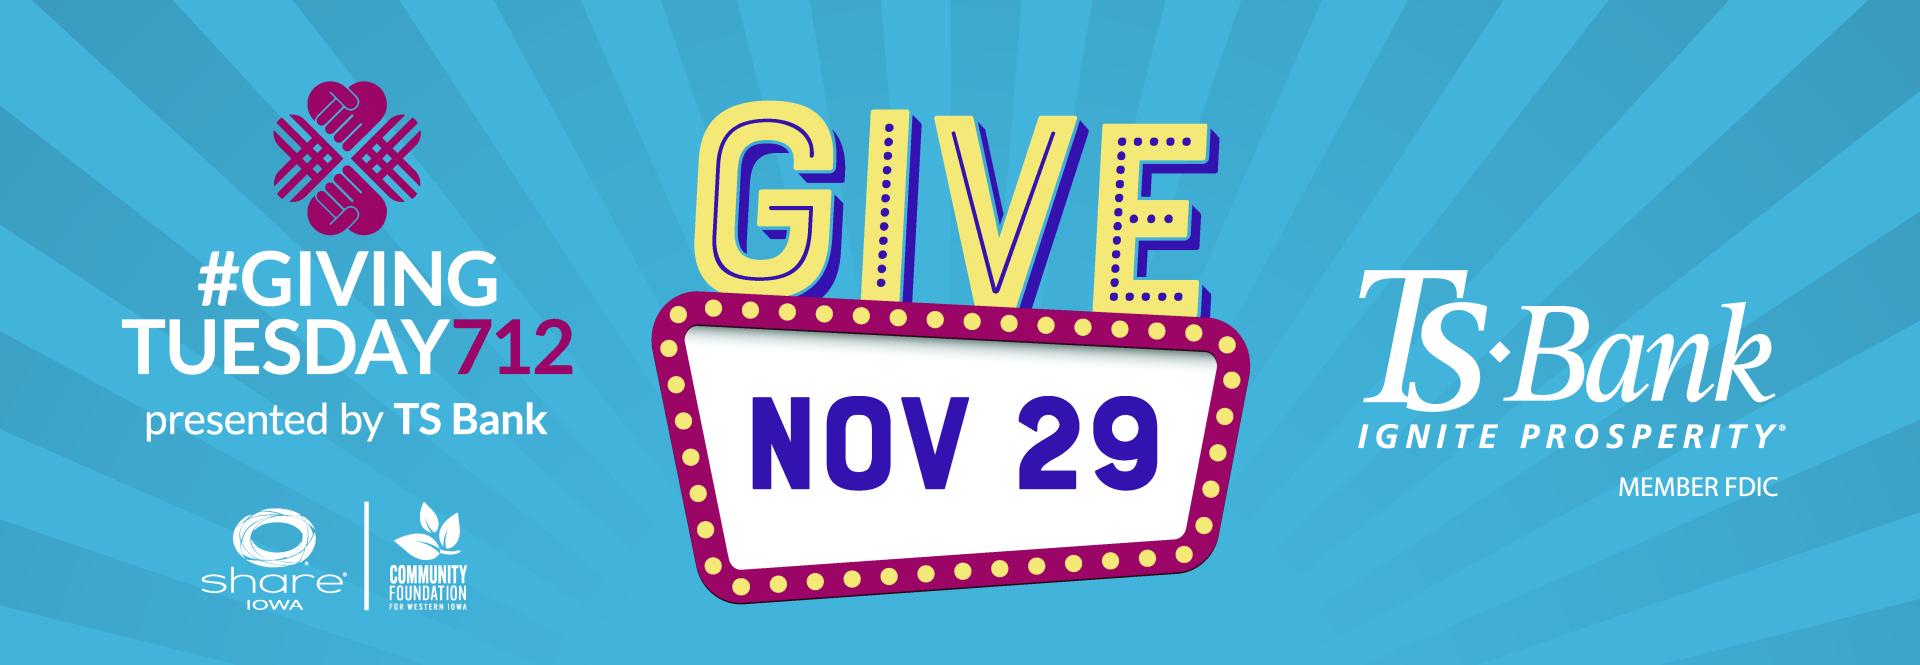 Giving Tuesday November 29